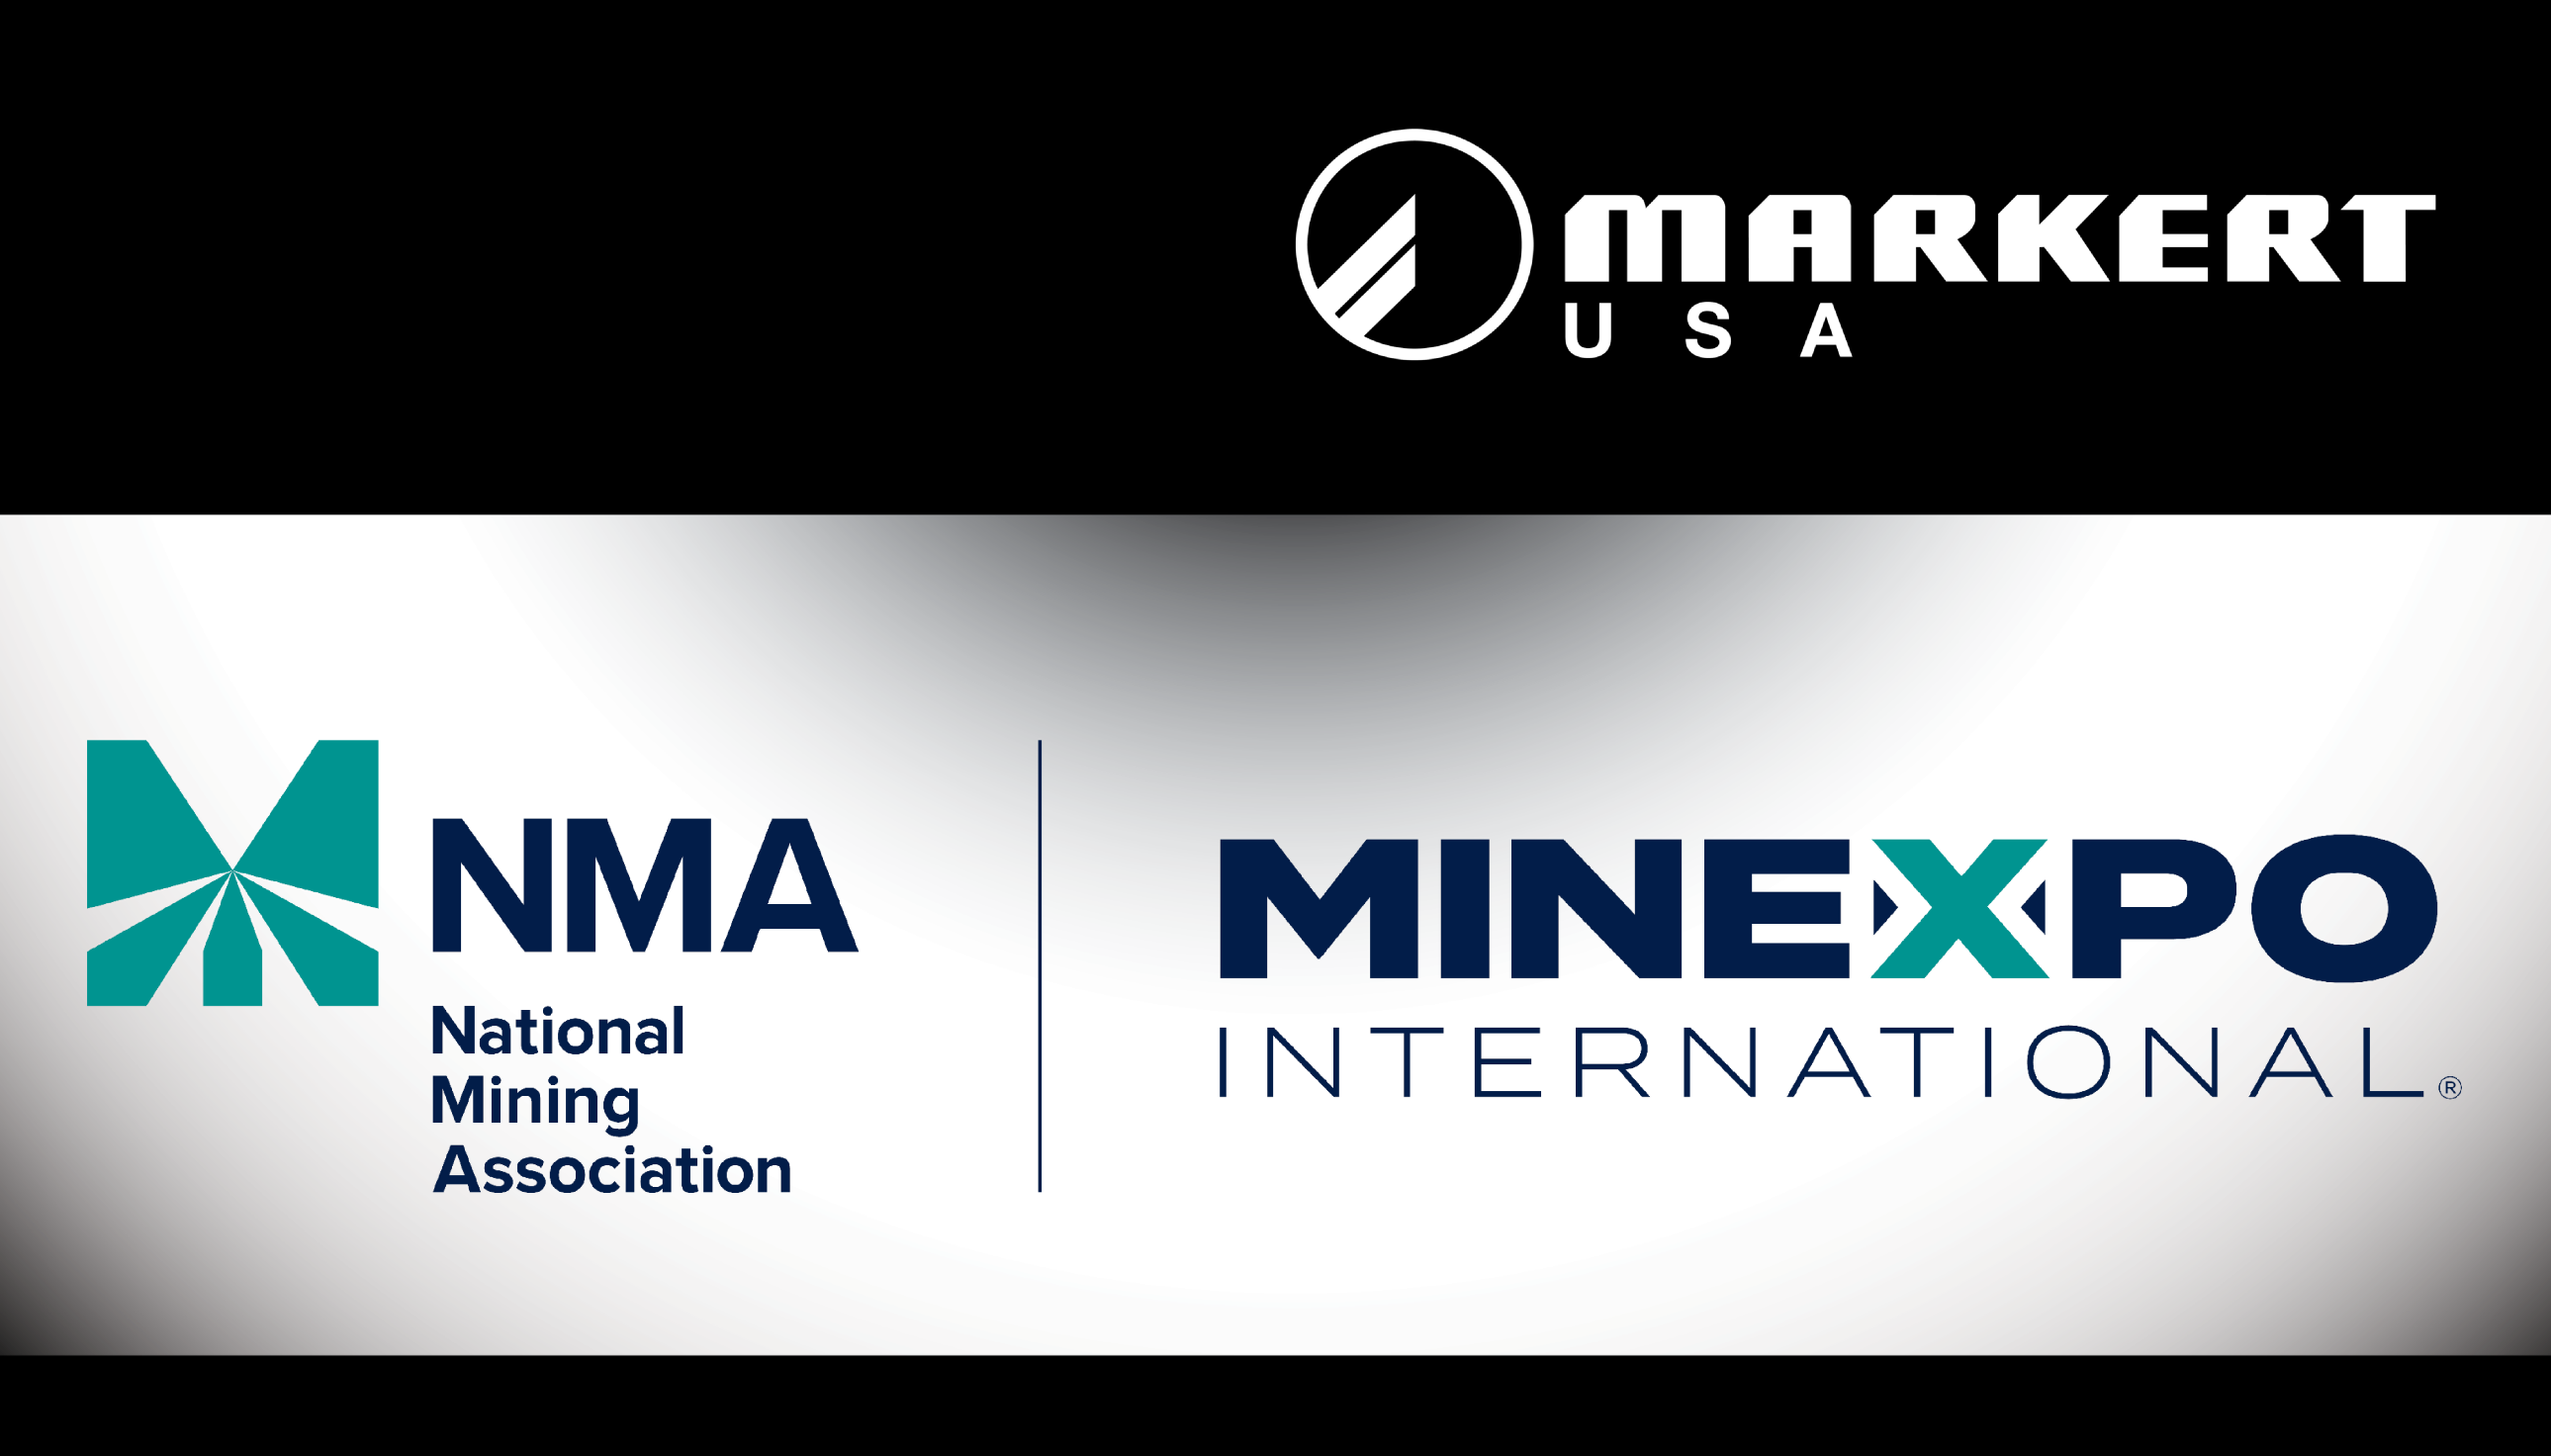 minexpo-mining-filtration-expo-markert-usa